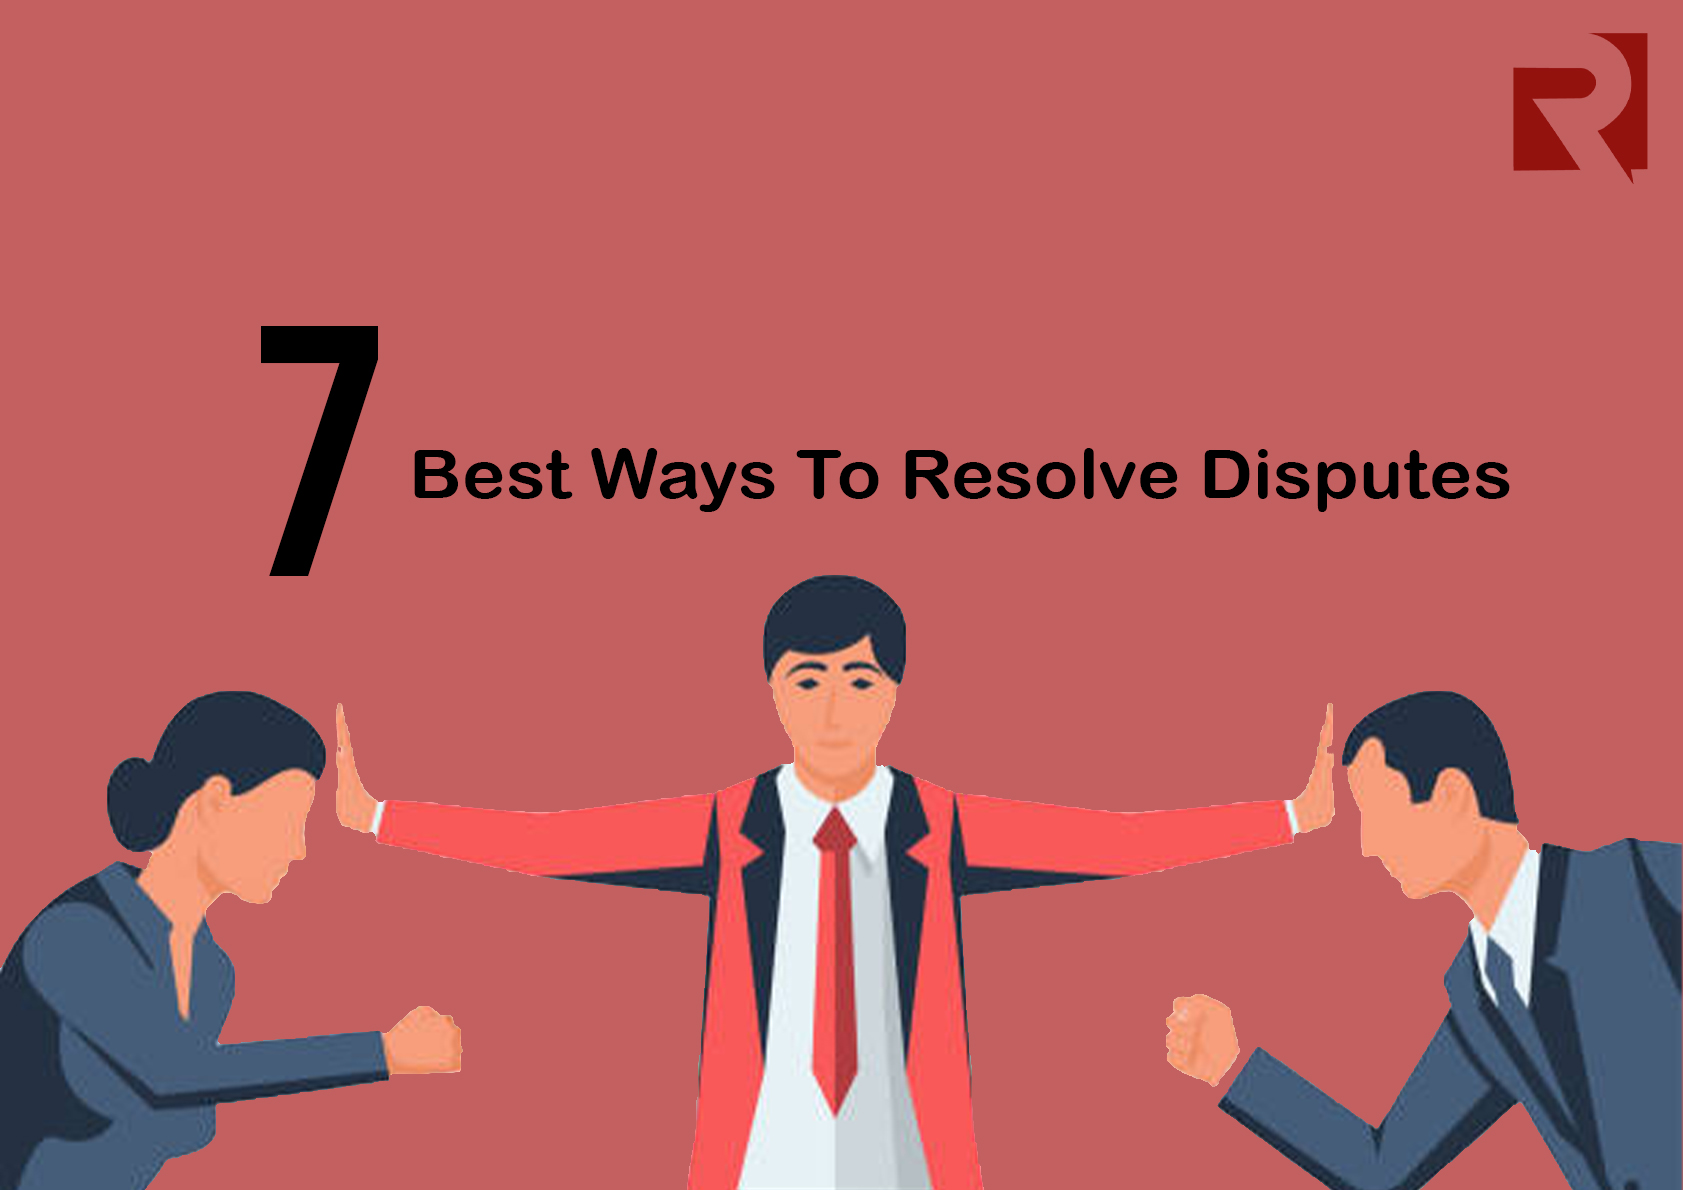 Seven Best Ways To Resolve Disputes